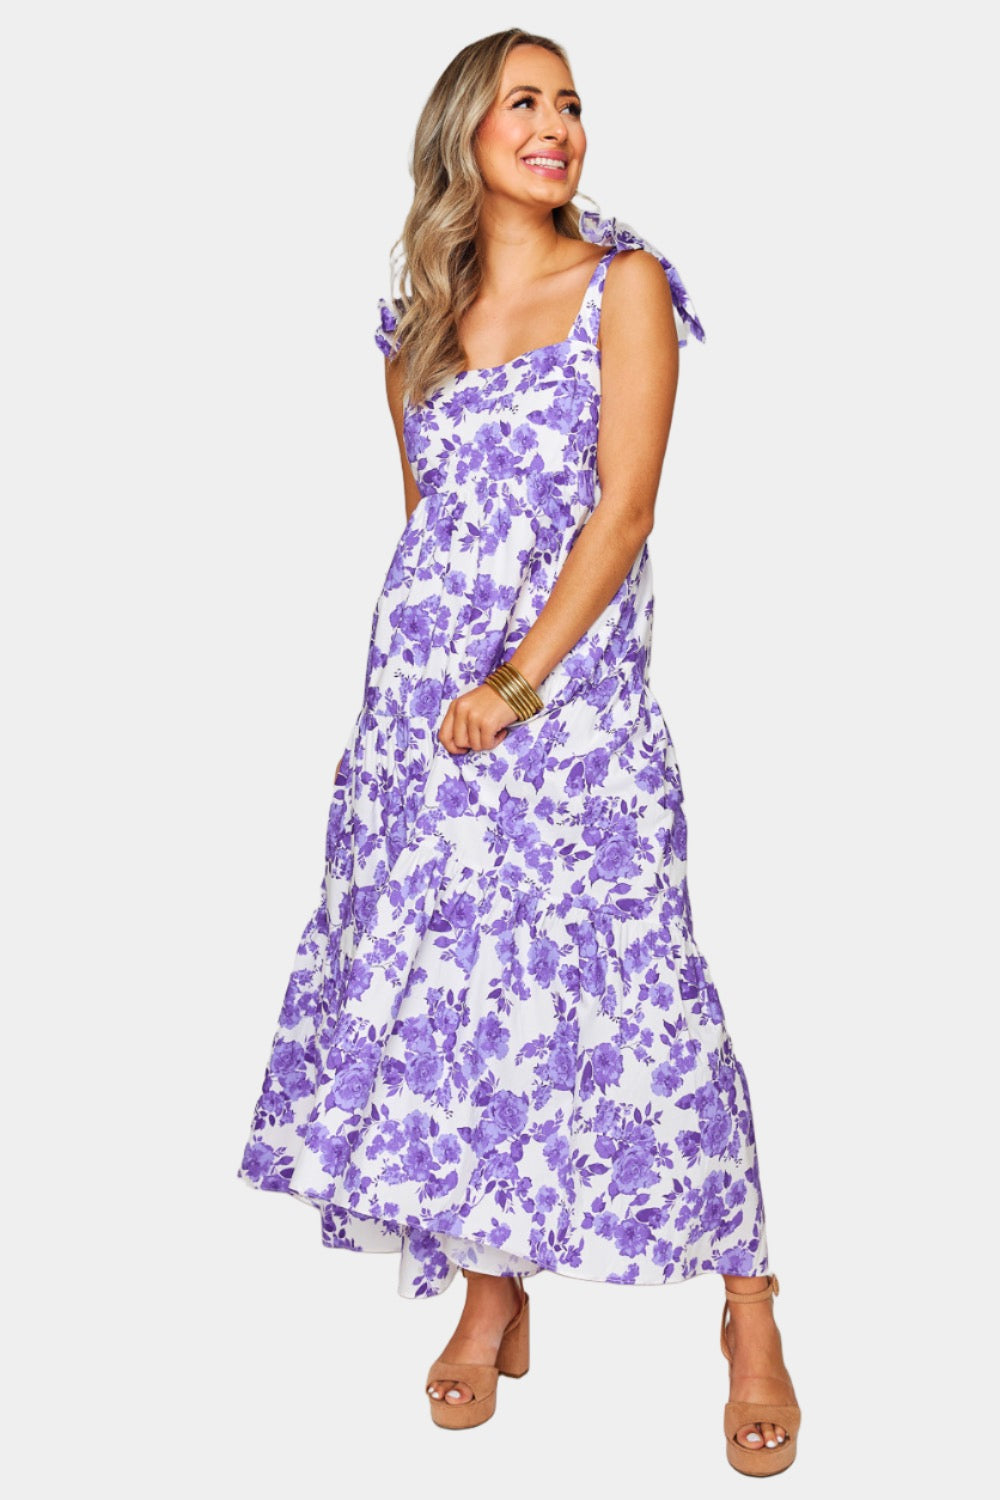 F&F White Purple Blue Floral Pattern Cold Shoulder Tunic Sun Dress